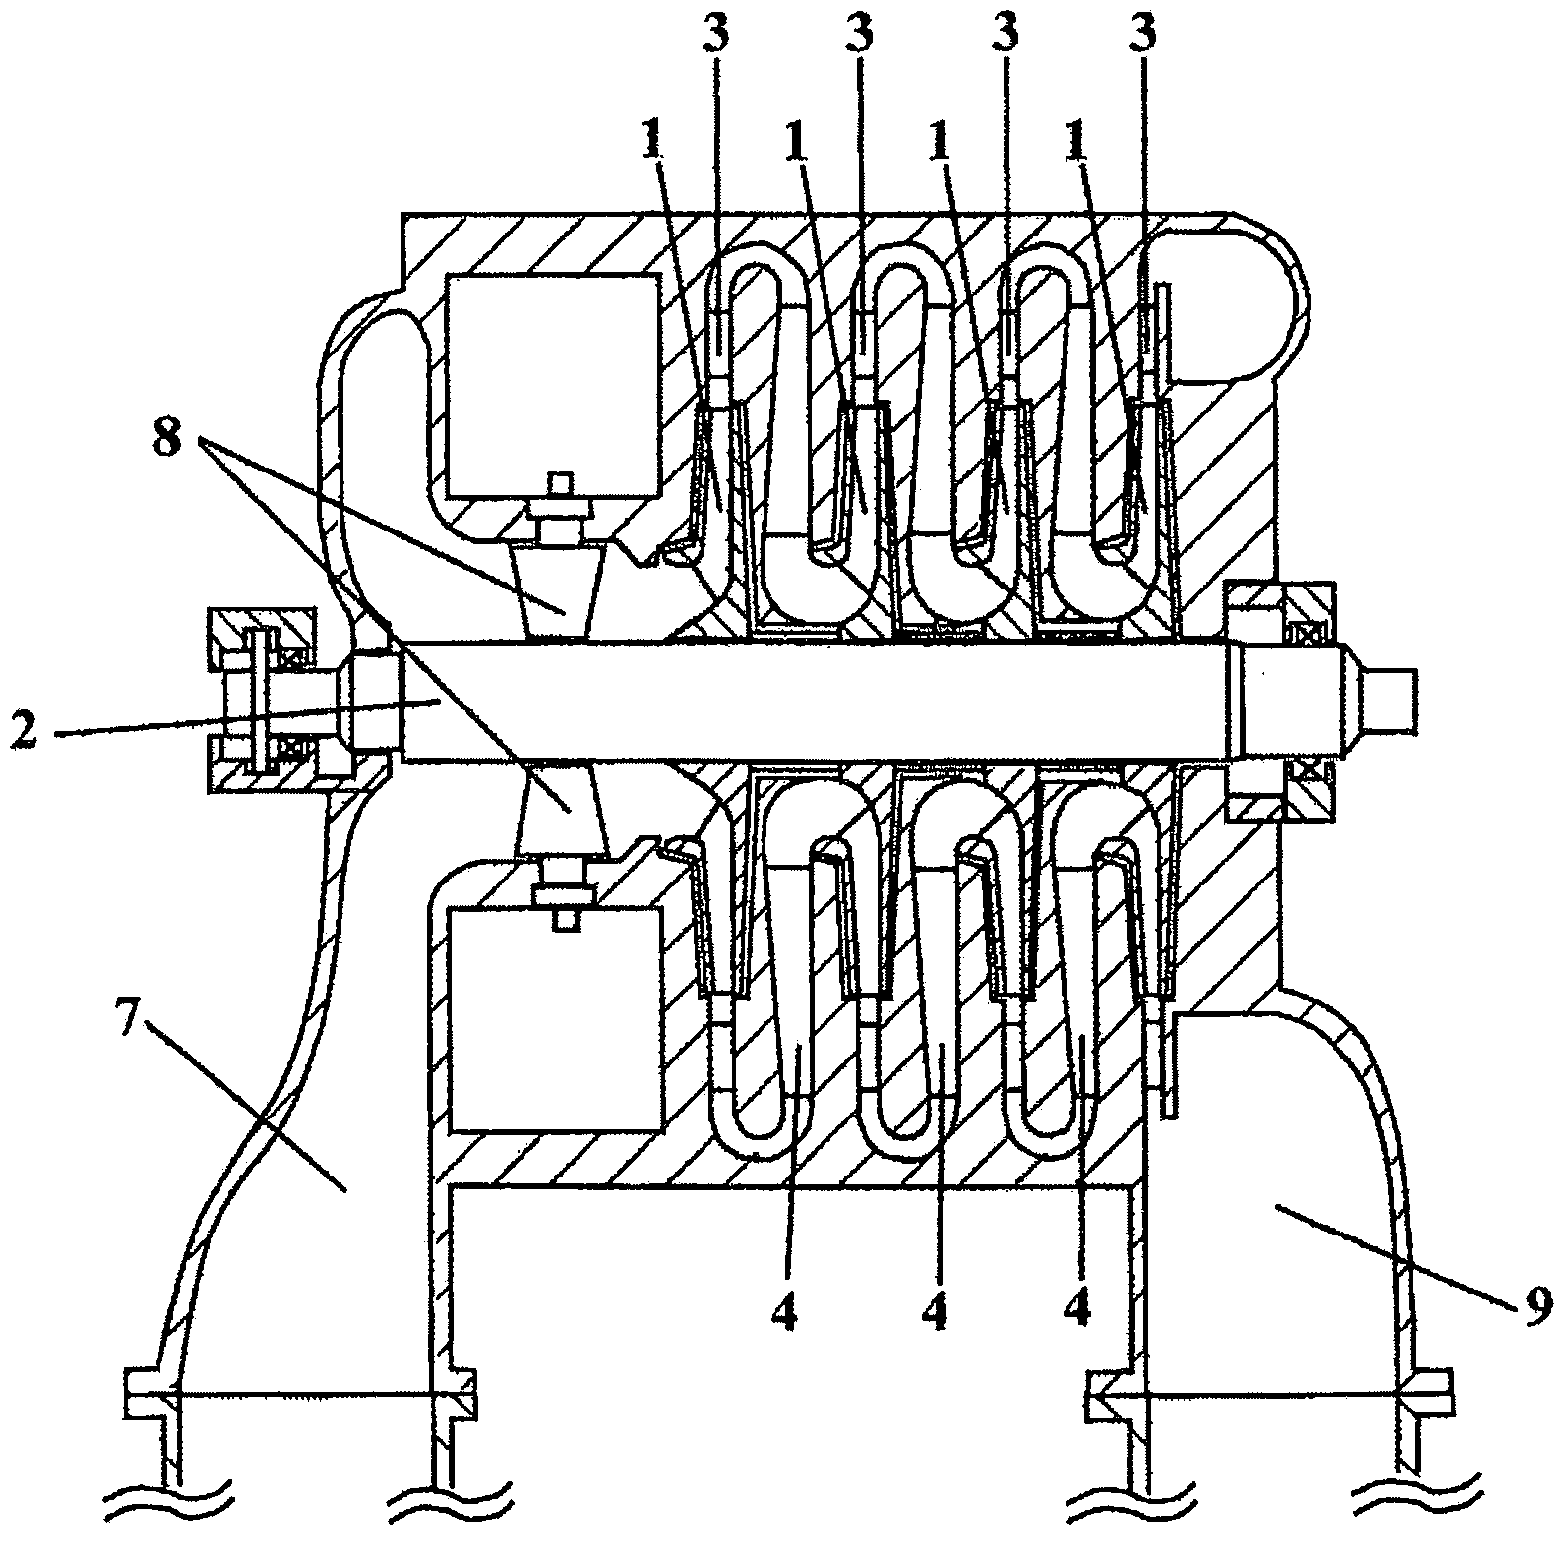 Centrifugal fluid machine